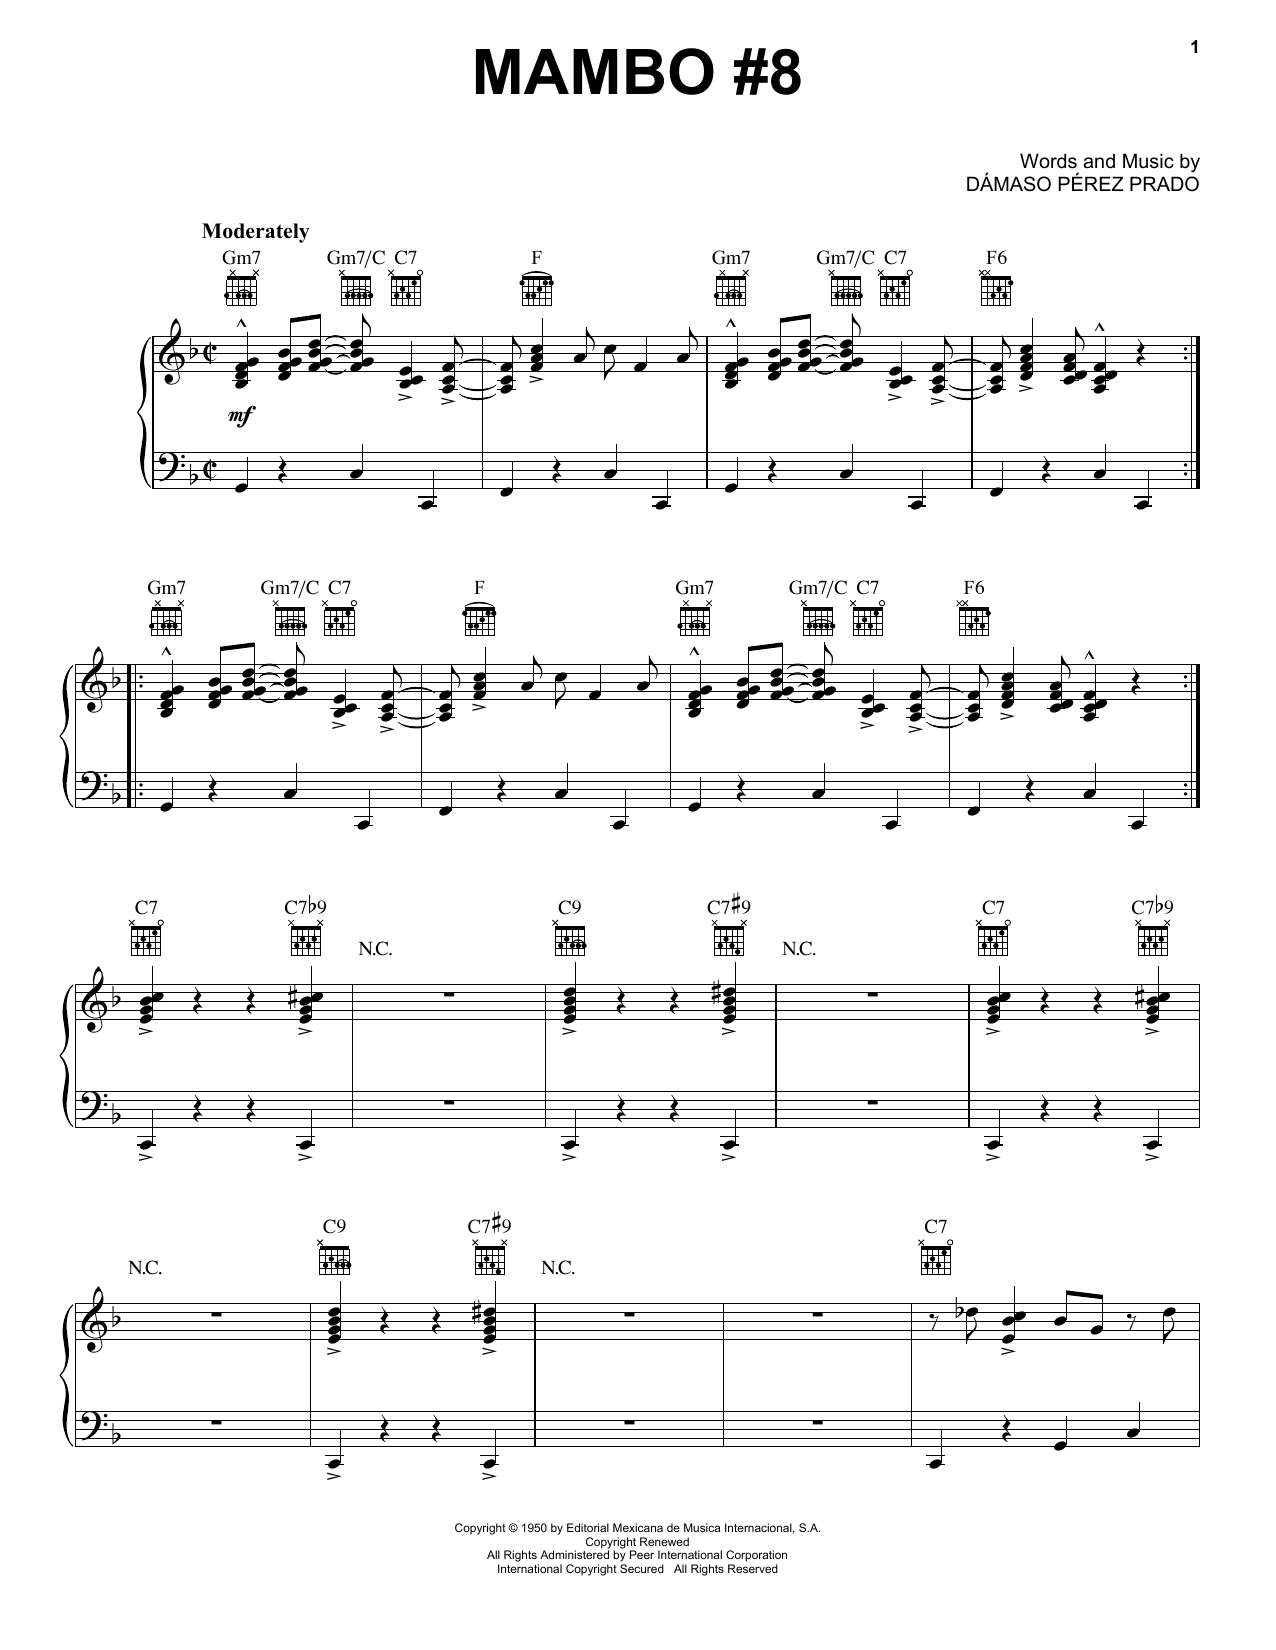 Pérez Prado Mambo #8 Sheet Music Notes & Chords for Piano, Vocal & Guitar Chords (Right-Hand Melody) - Download or Print PDF